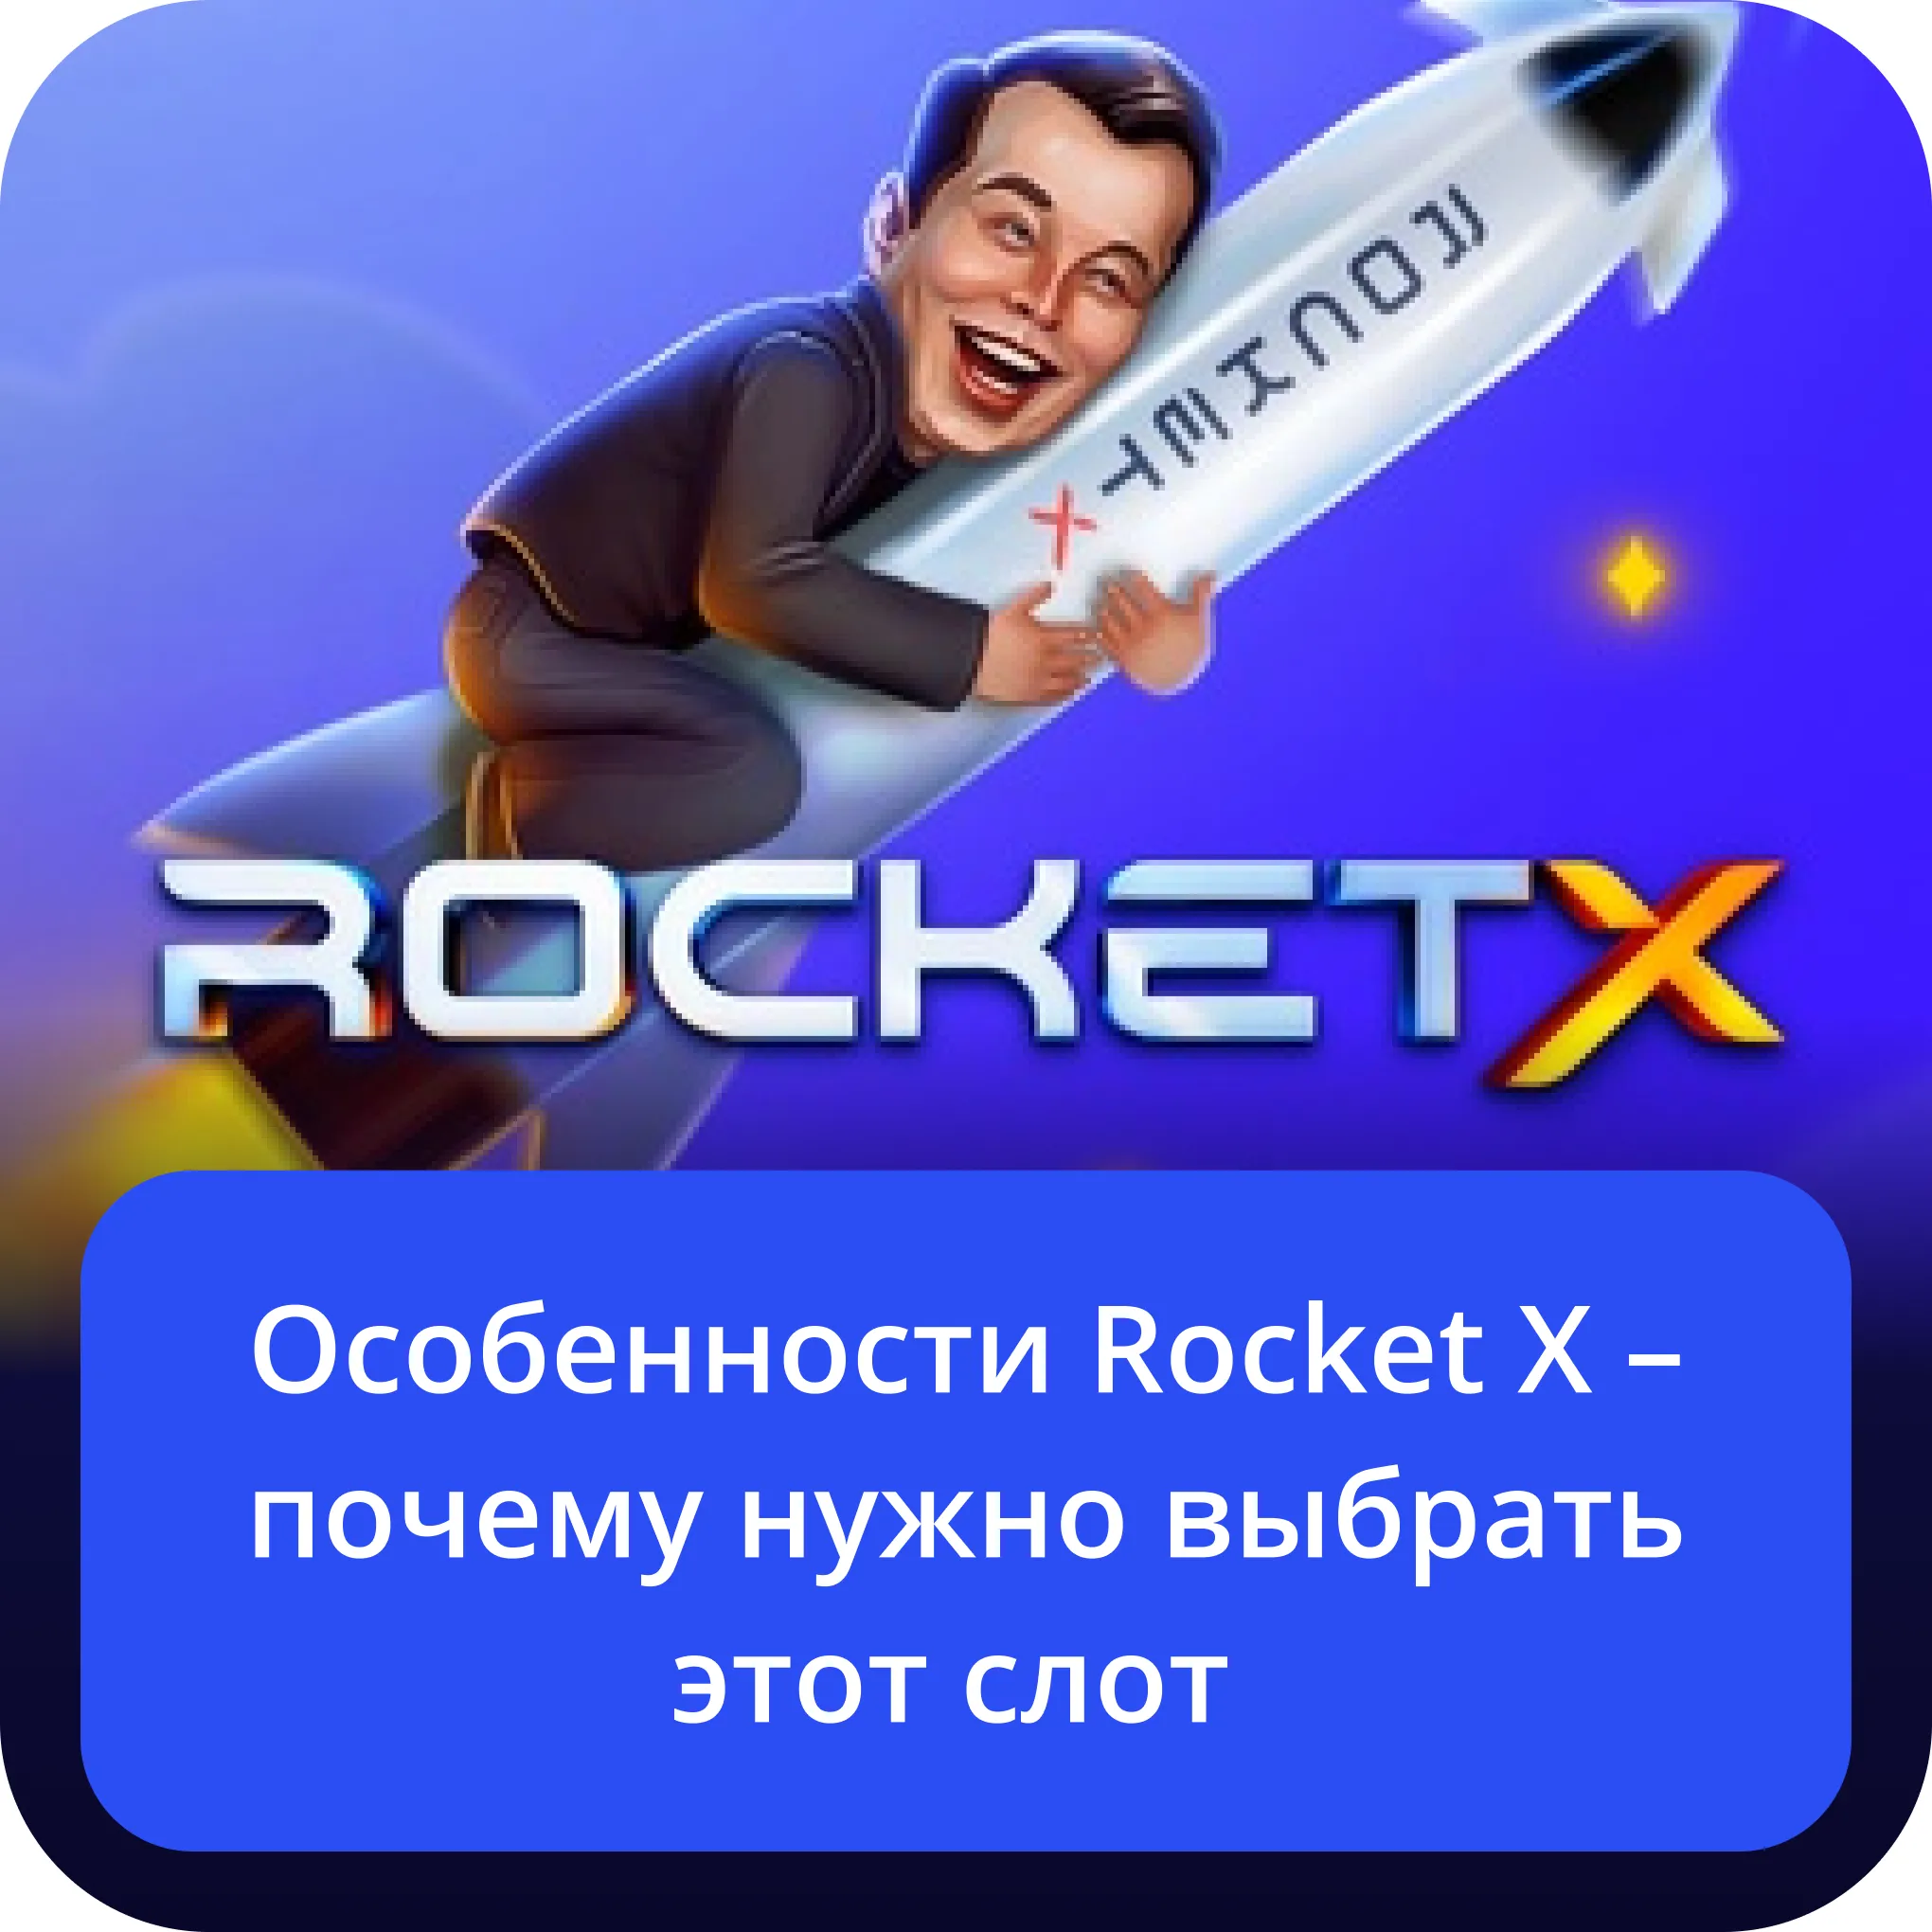 особенности rocket x